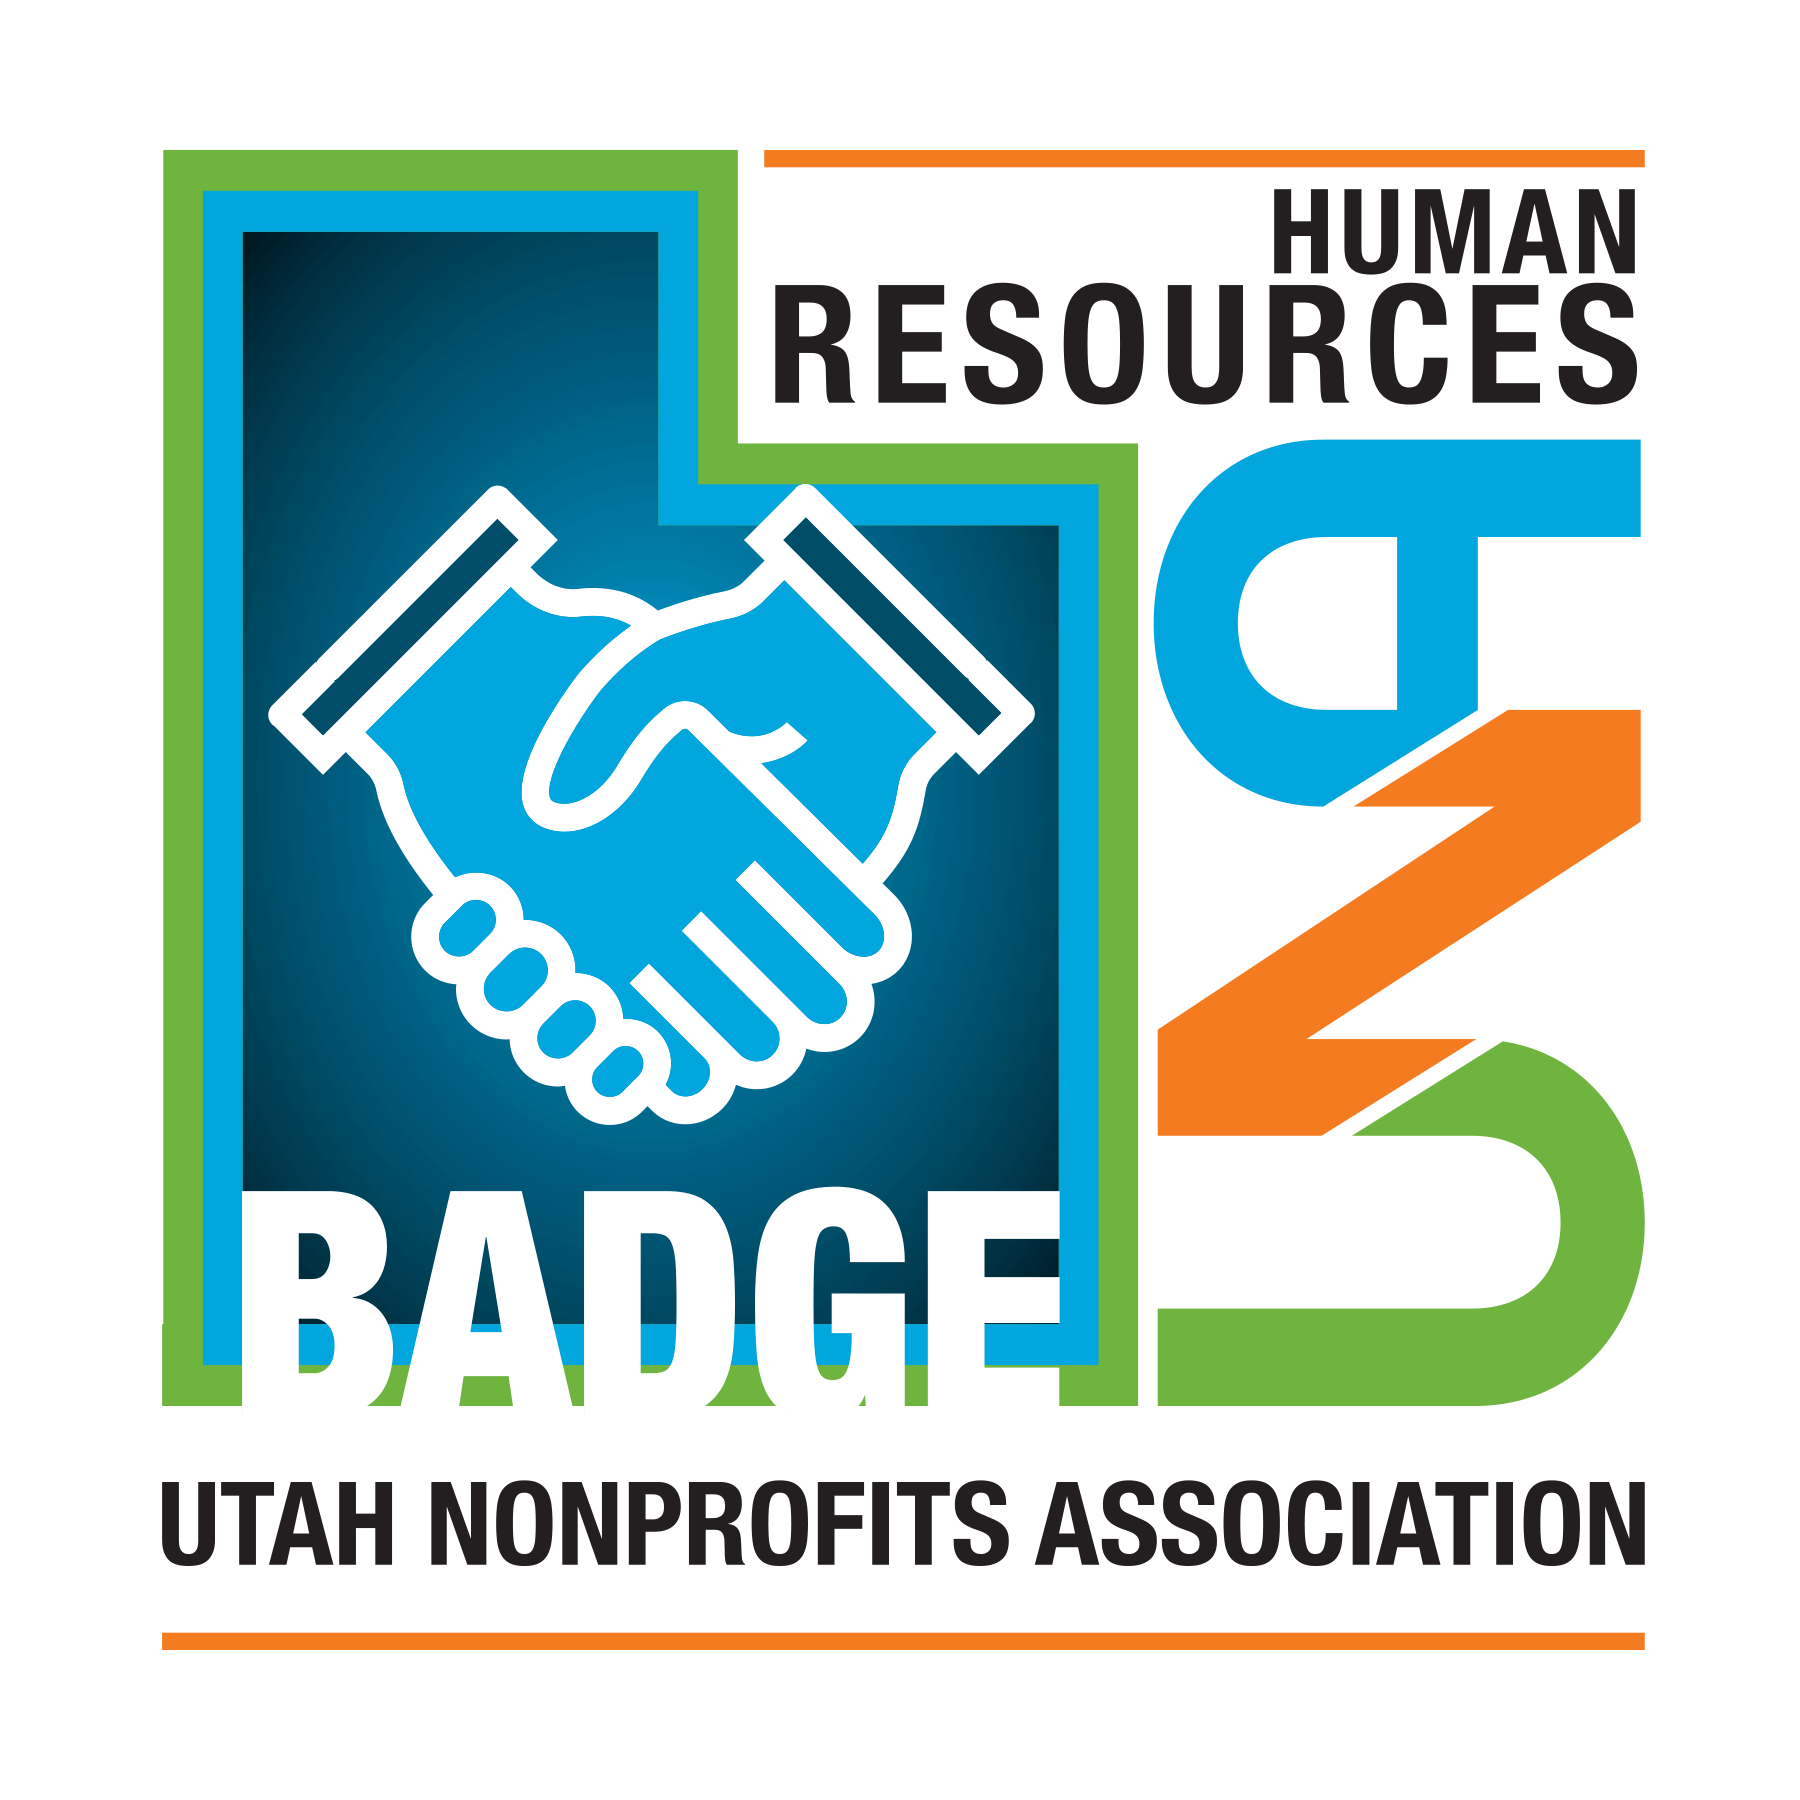 UNA Nonprofit Credential Badge for Human Resources